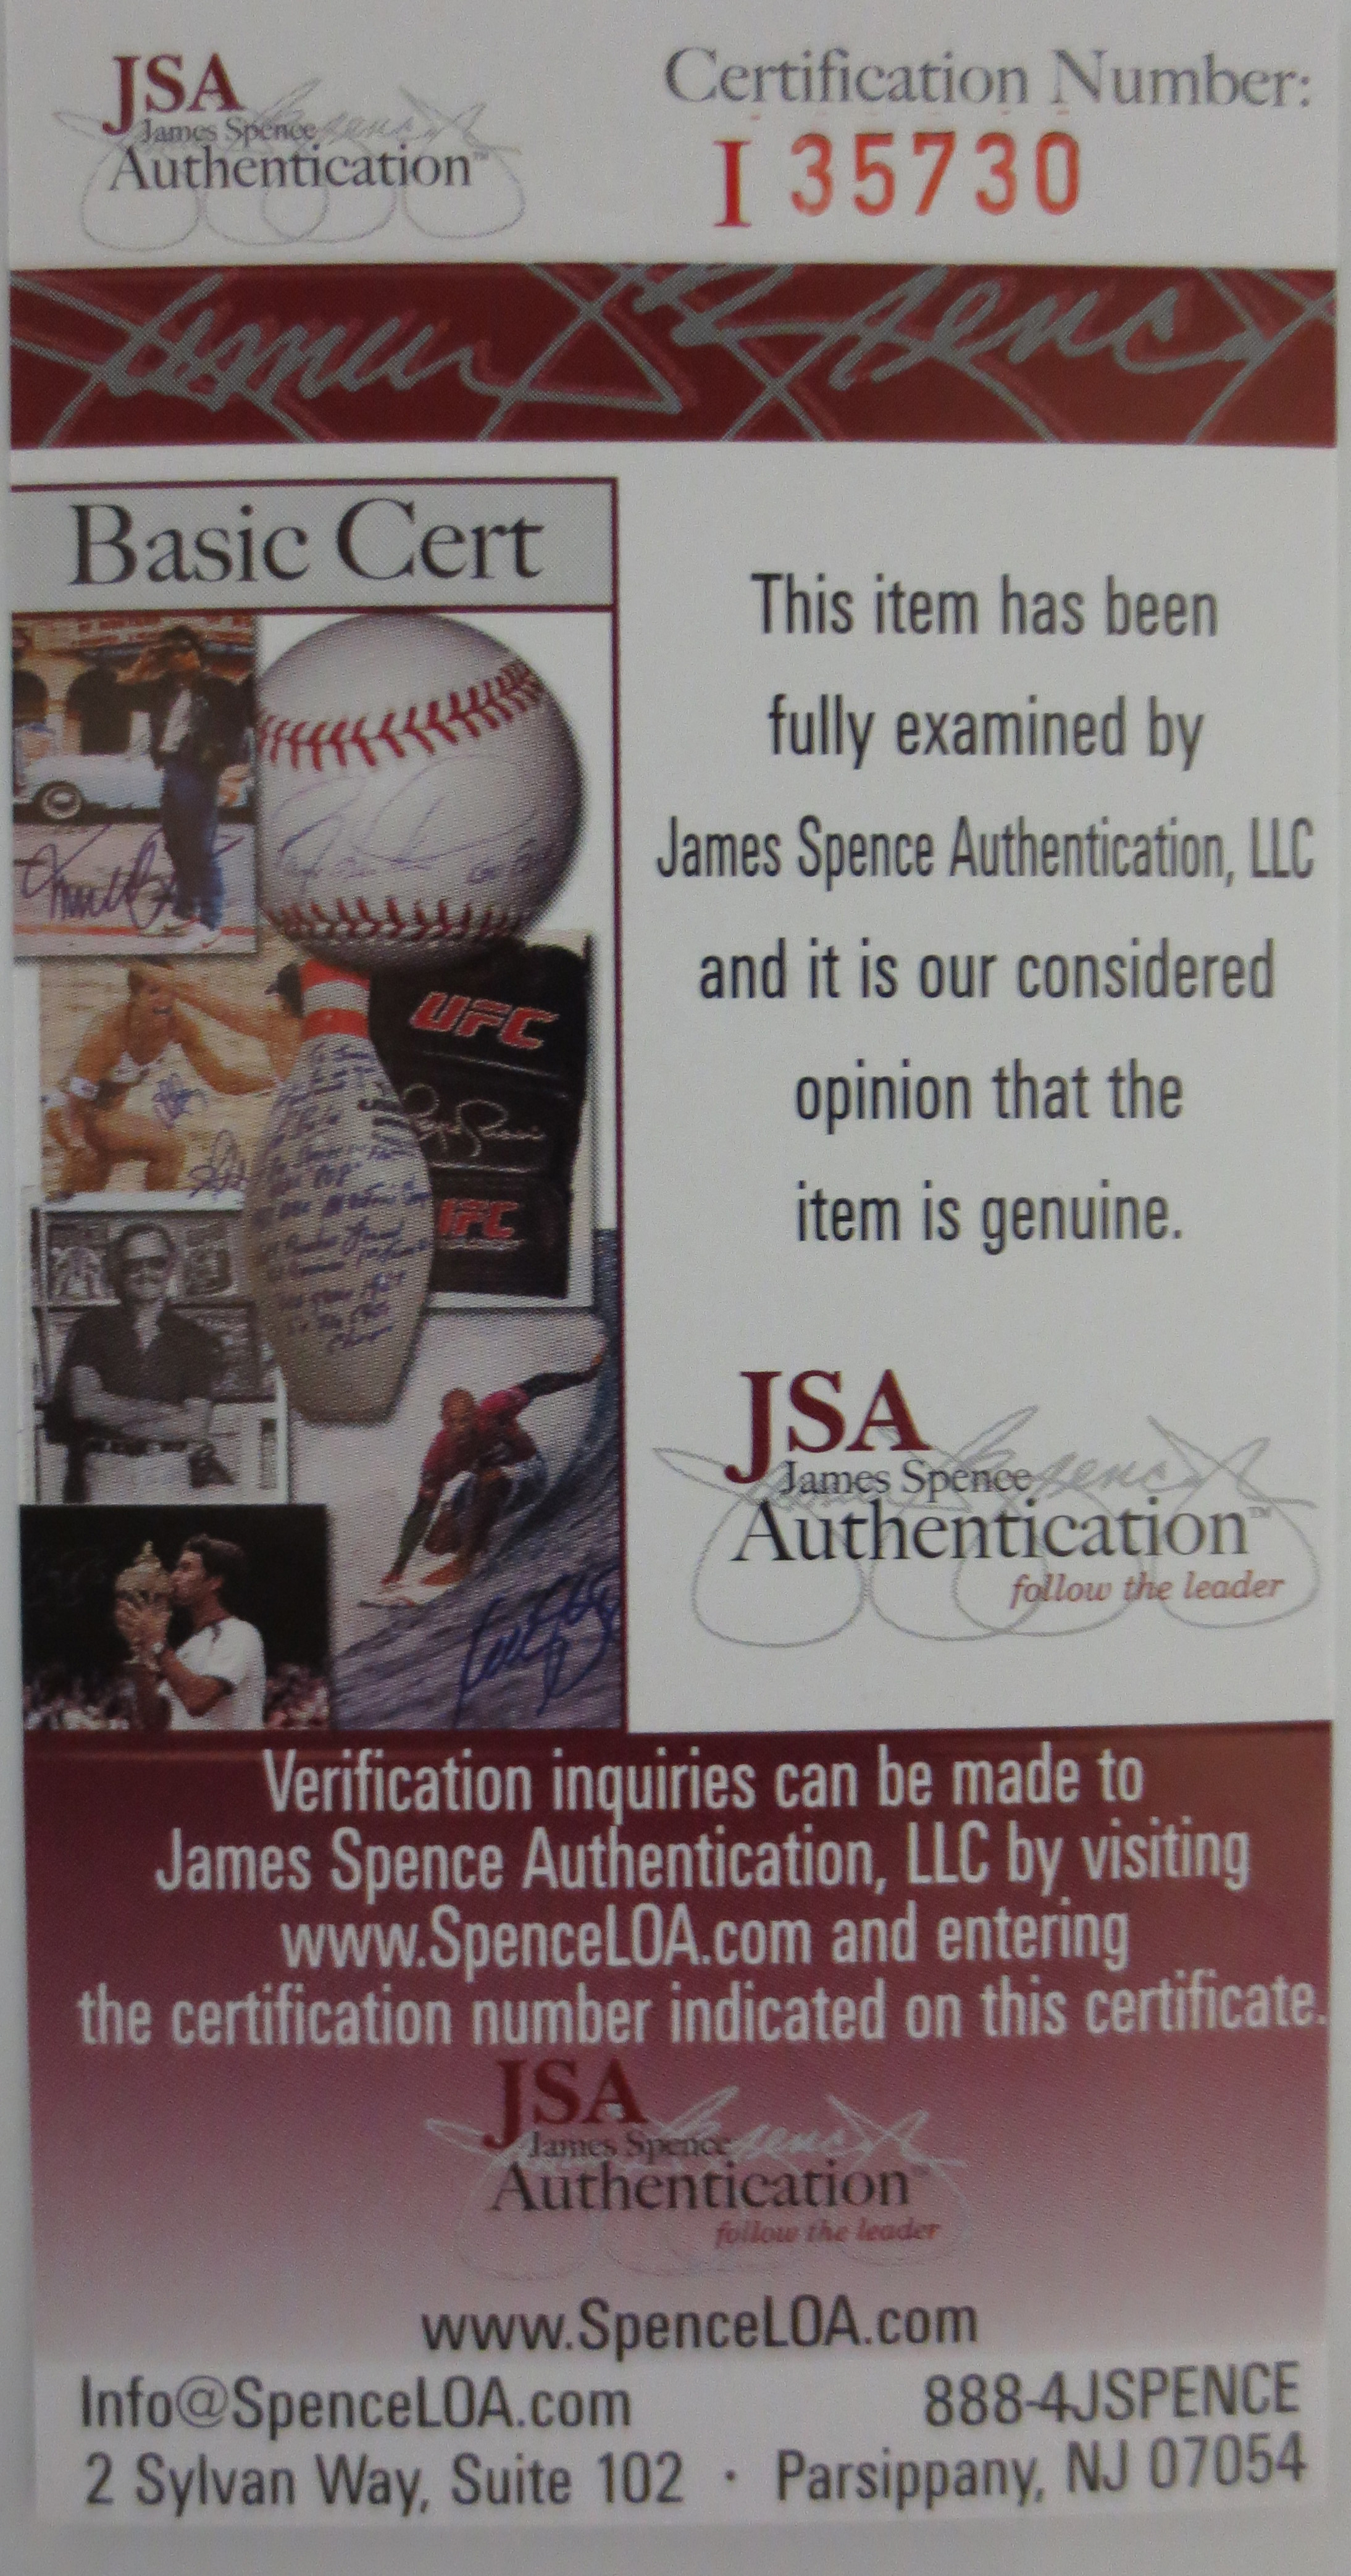 Powers Autographs proudly sells authentic autographed memorabilia from JSA.